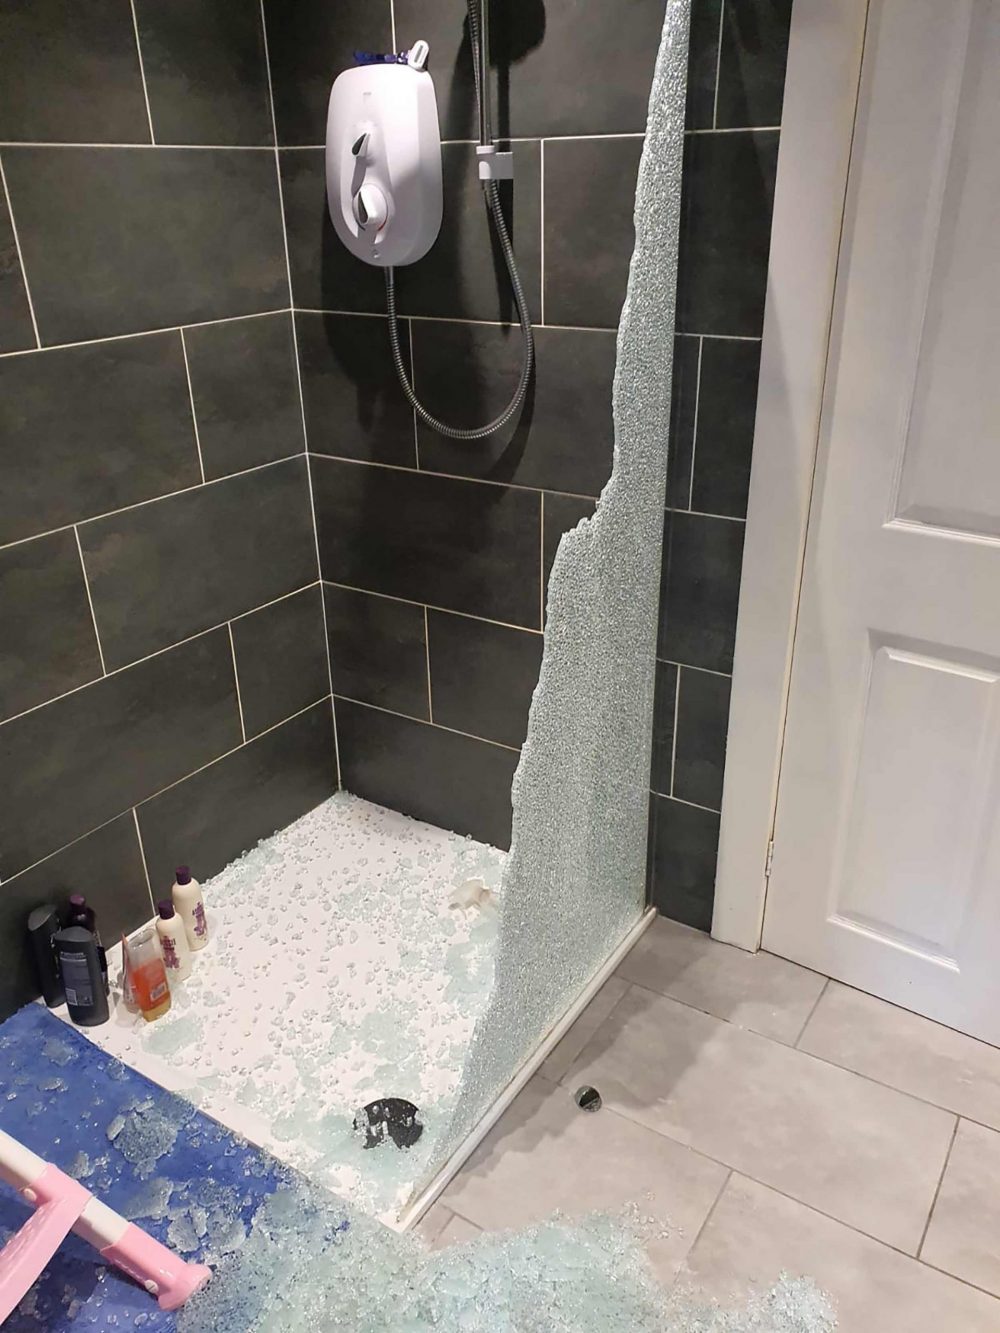 The glass shower screen exploded - Scottish News